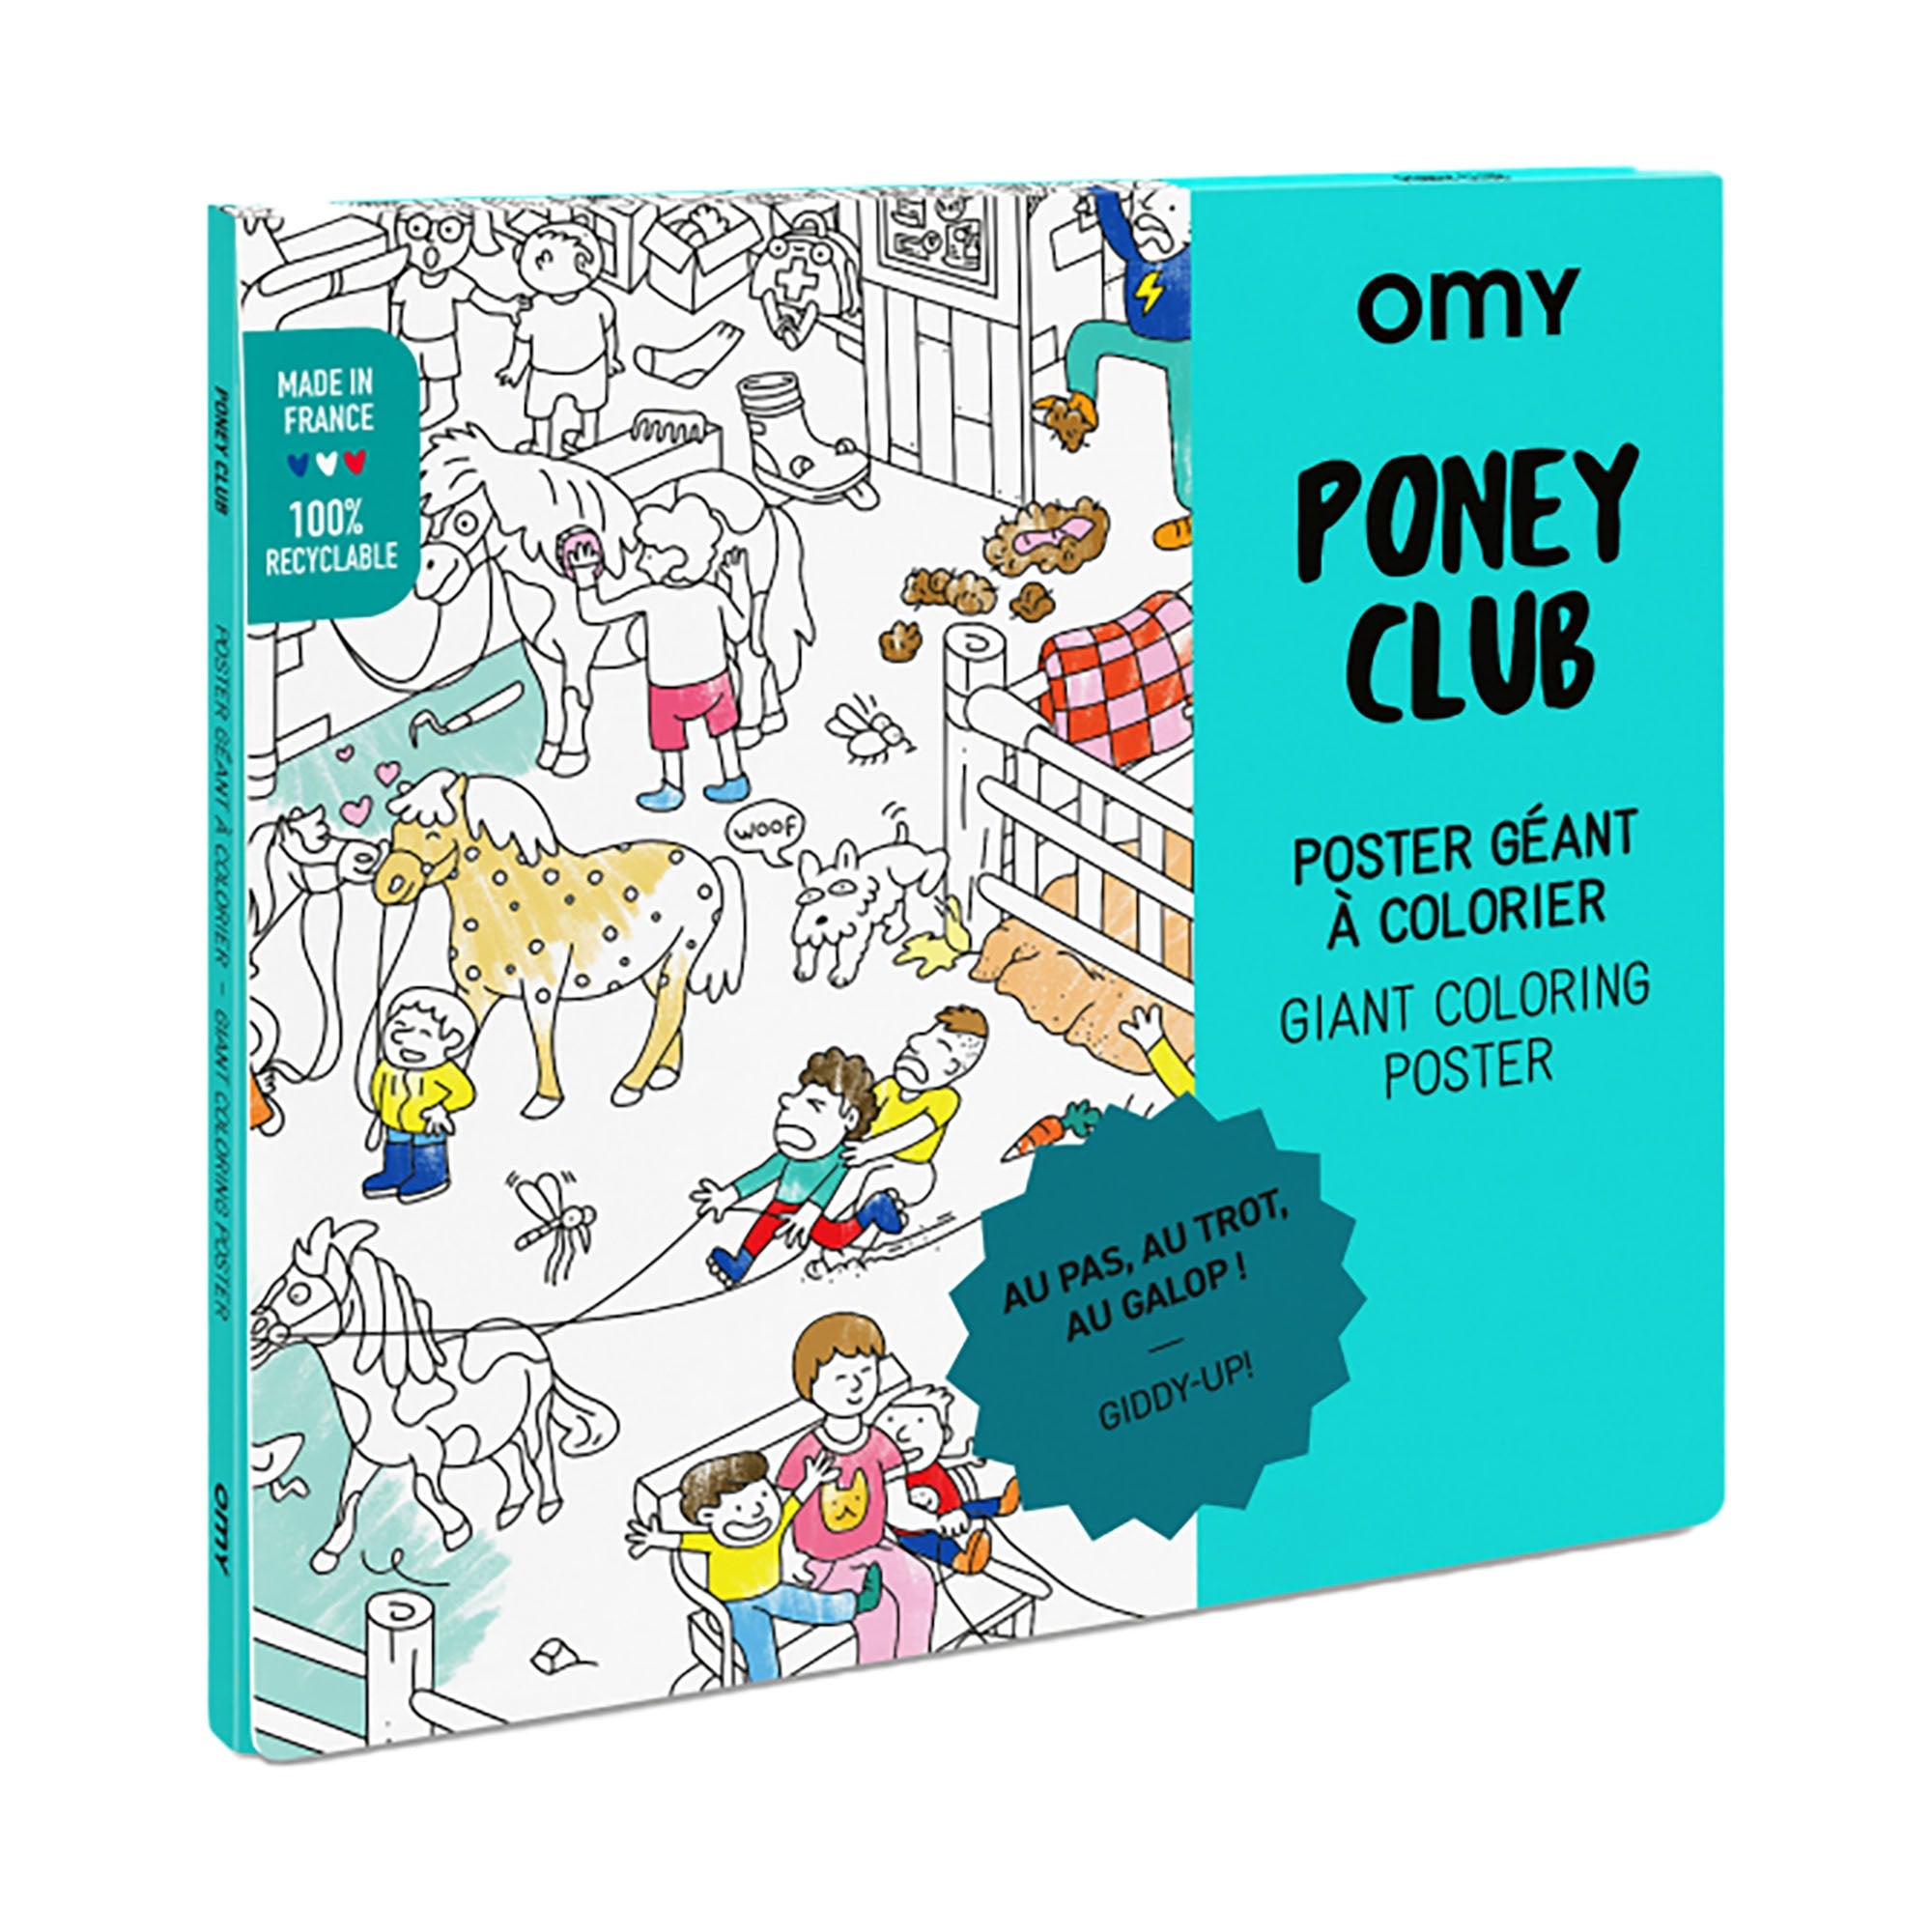 Poster Géant à colorier Poney Club by OMY